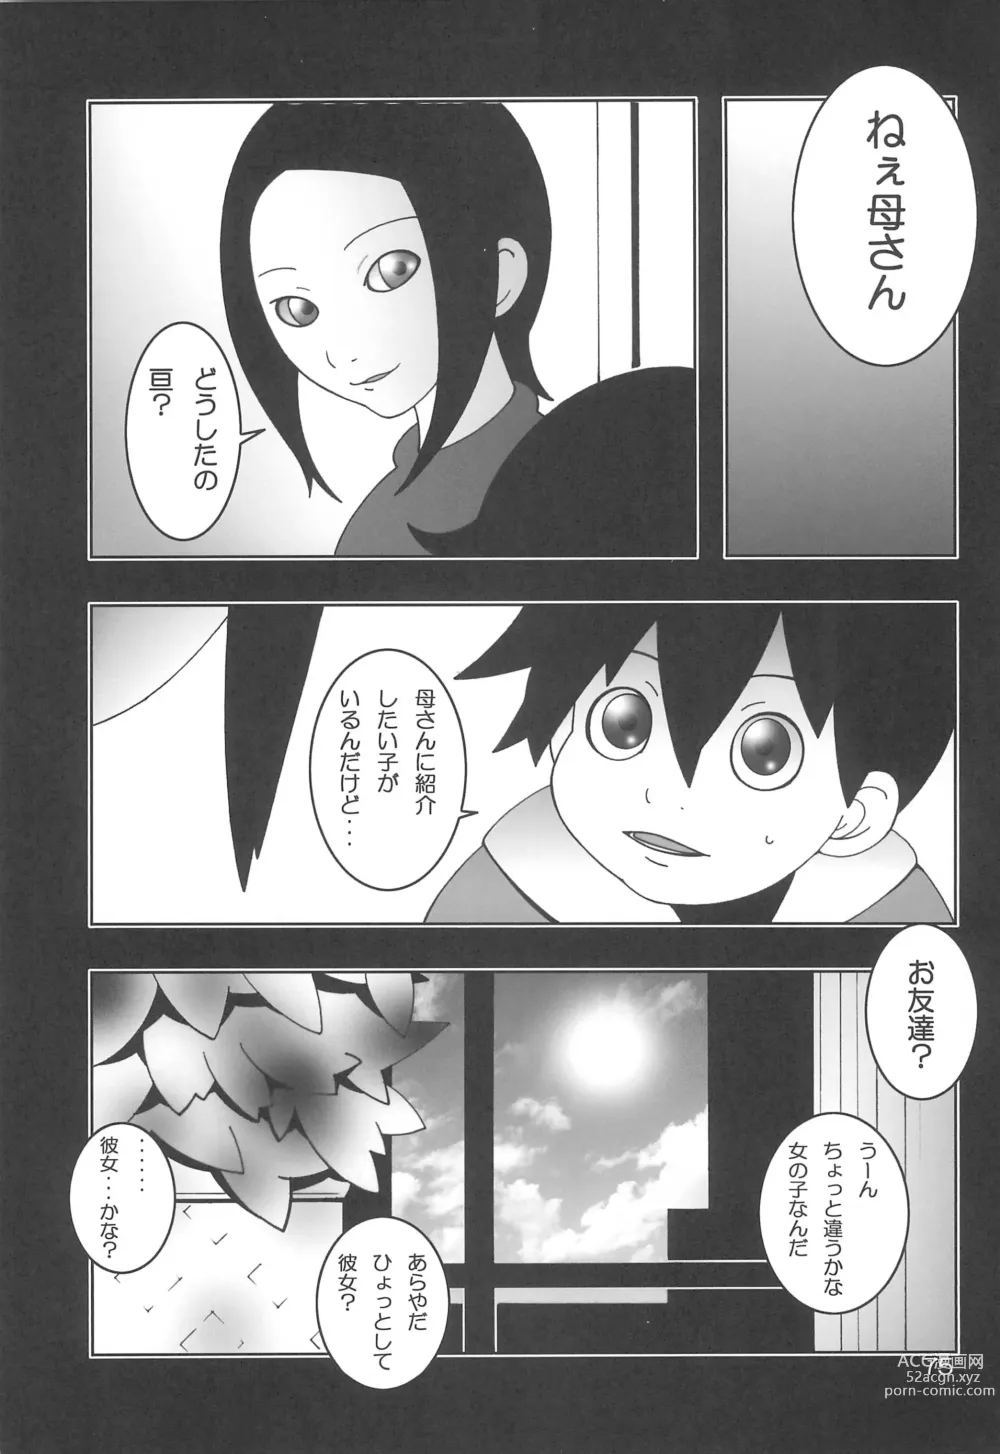 Page 75 of doujinshi Watamii!